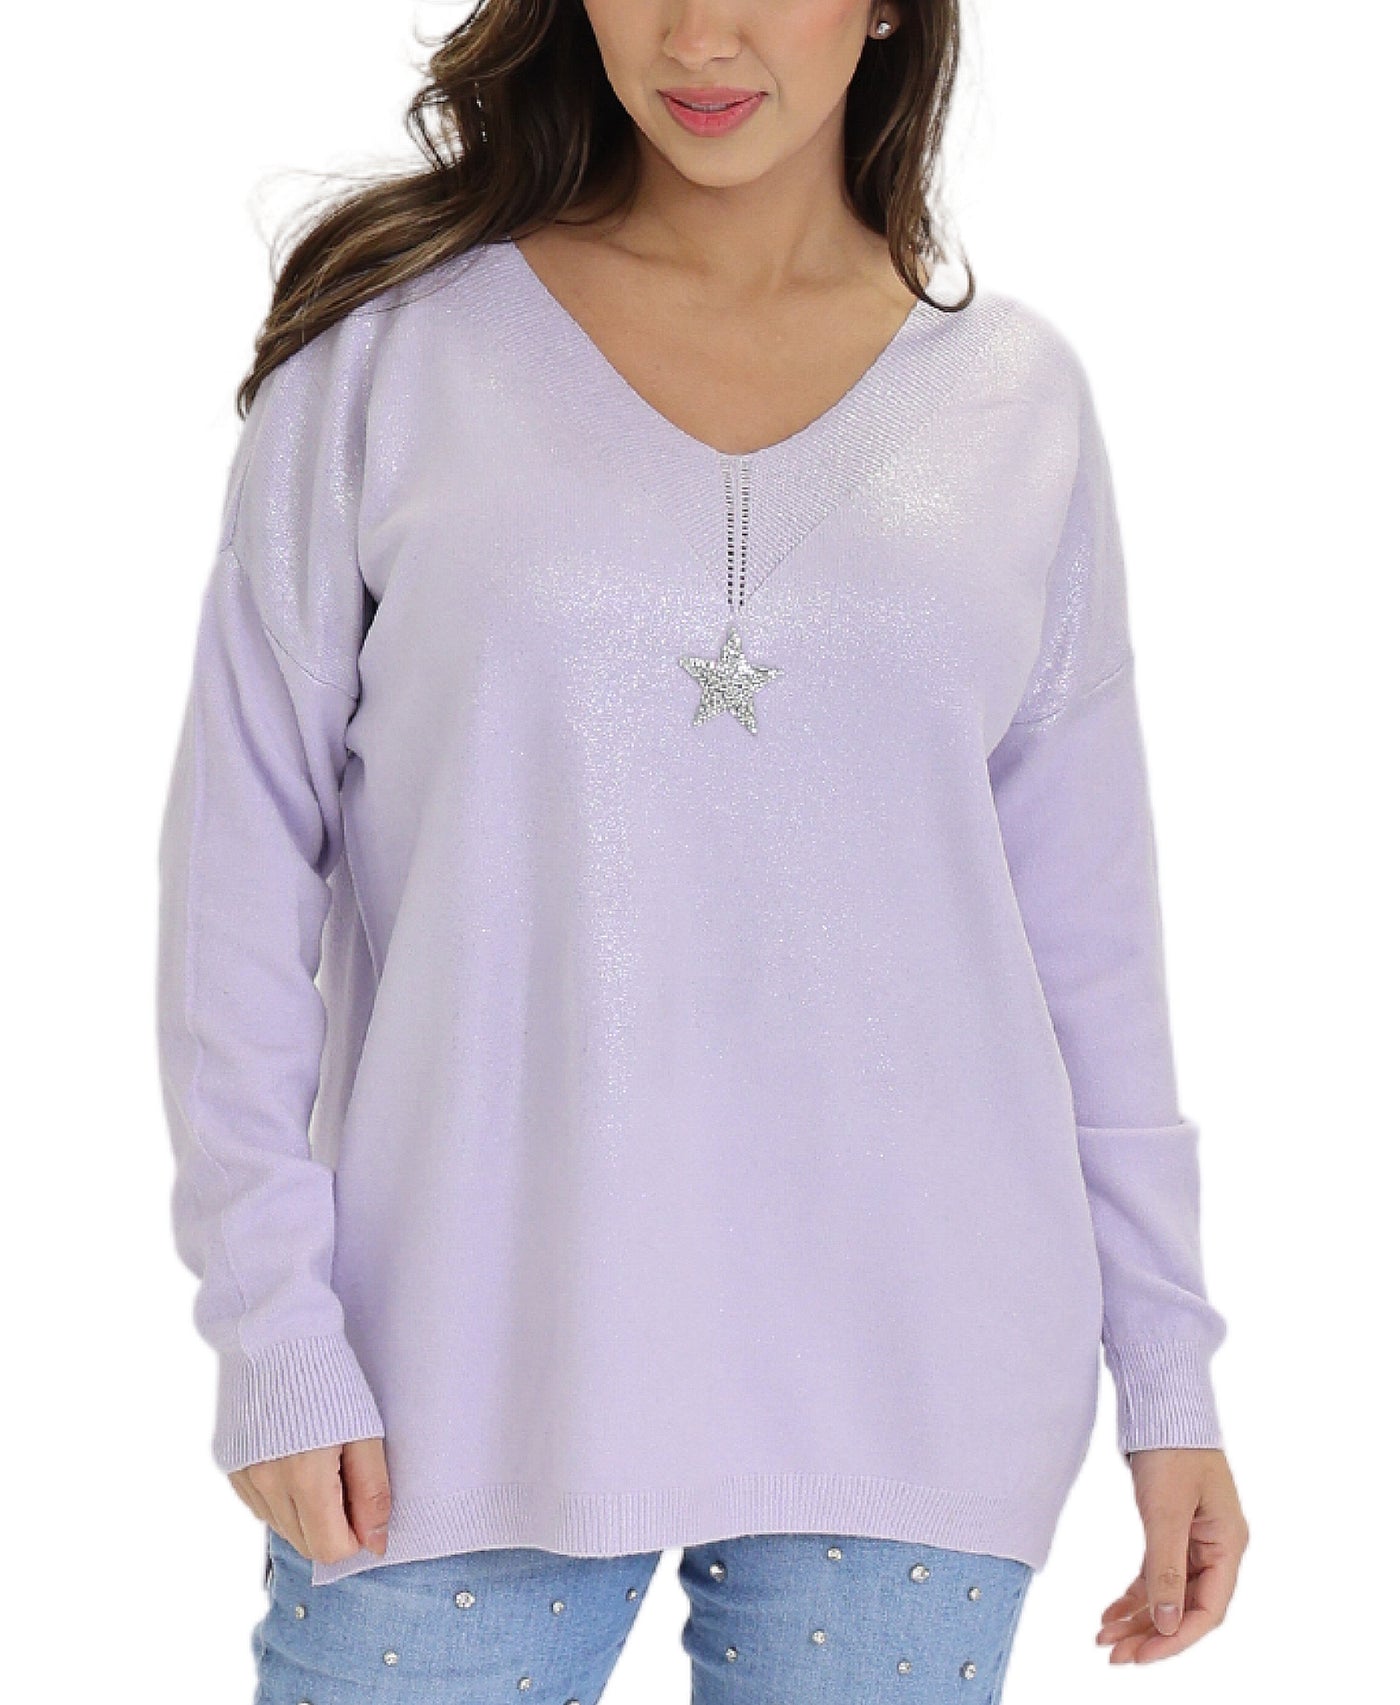 Beaded Star Shimmer Sweater image 1